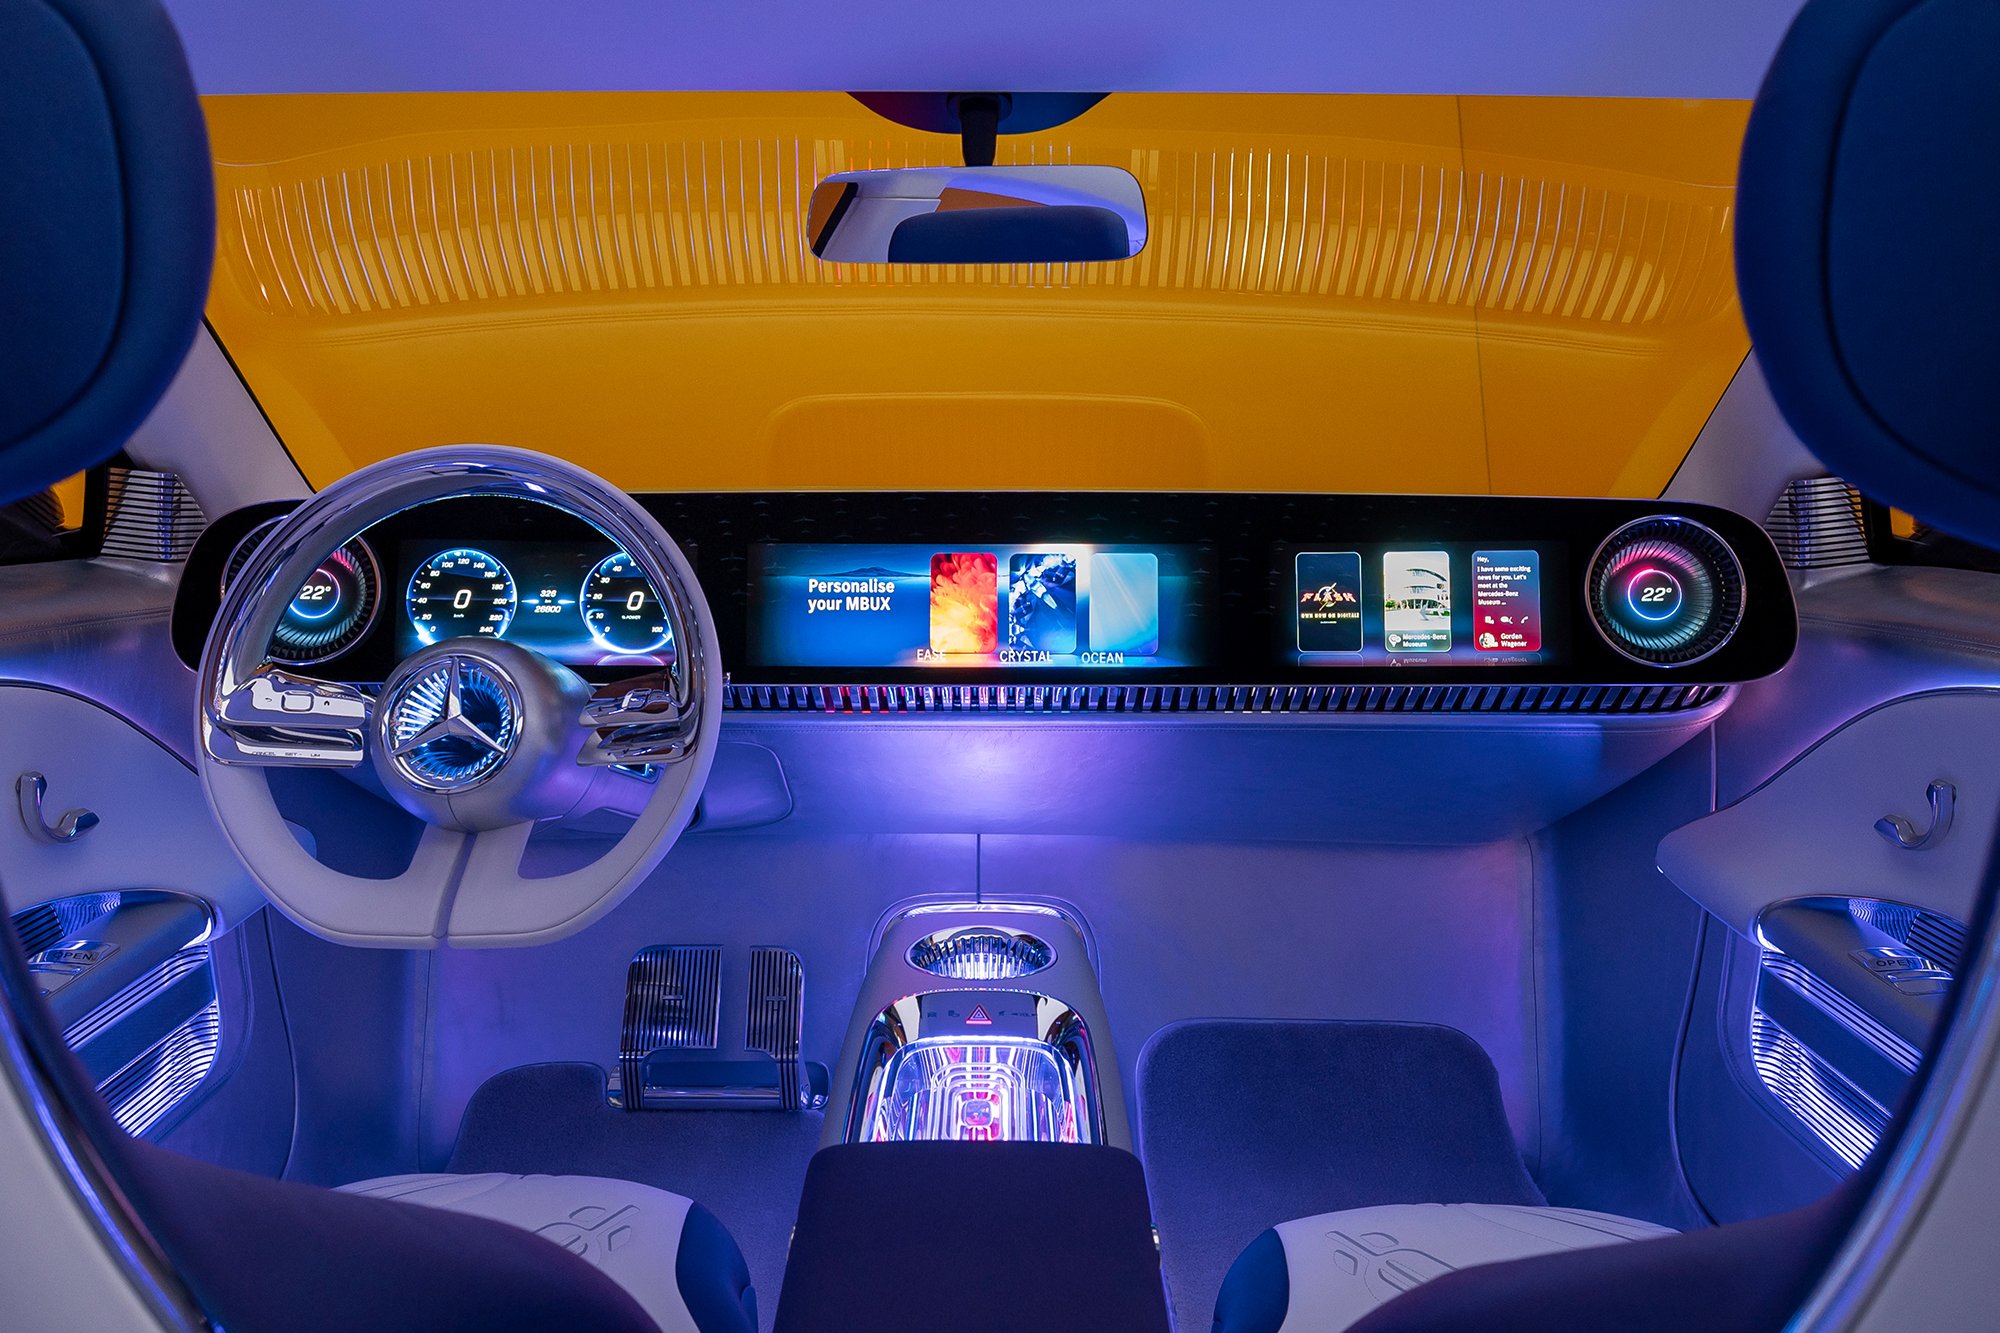 The interior design of the Mercedes-Benz Concept CLA